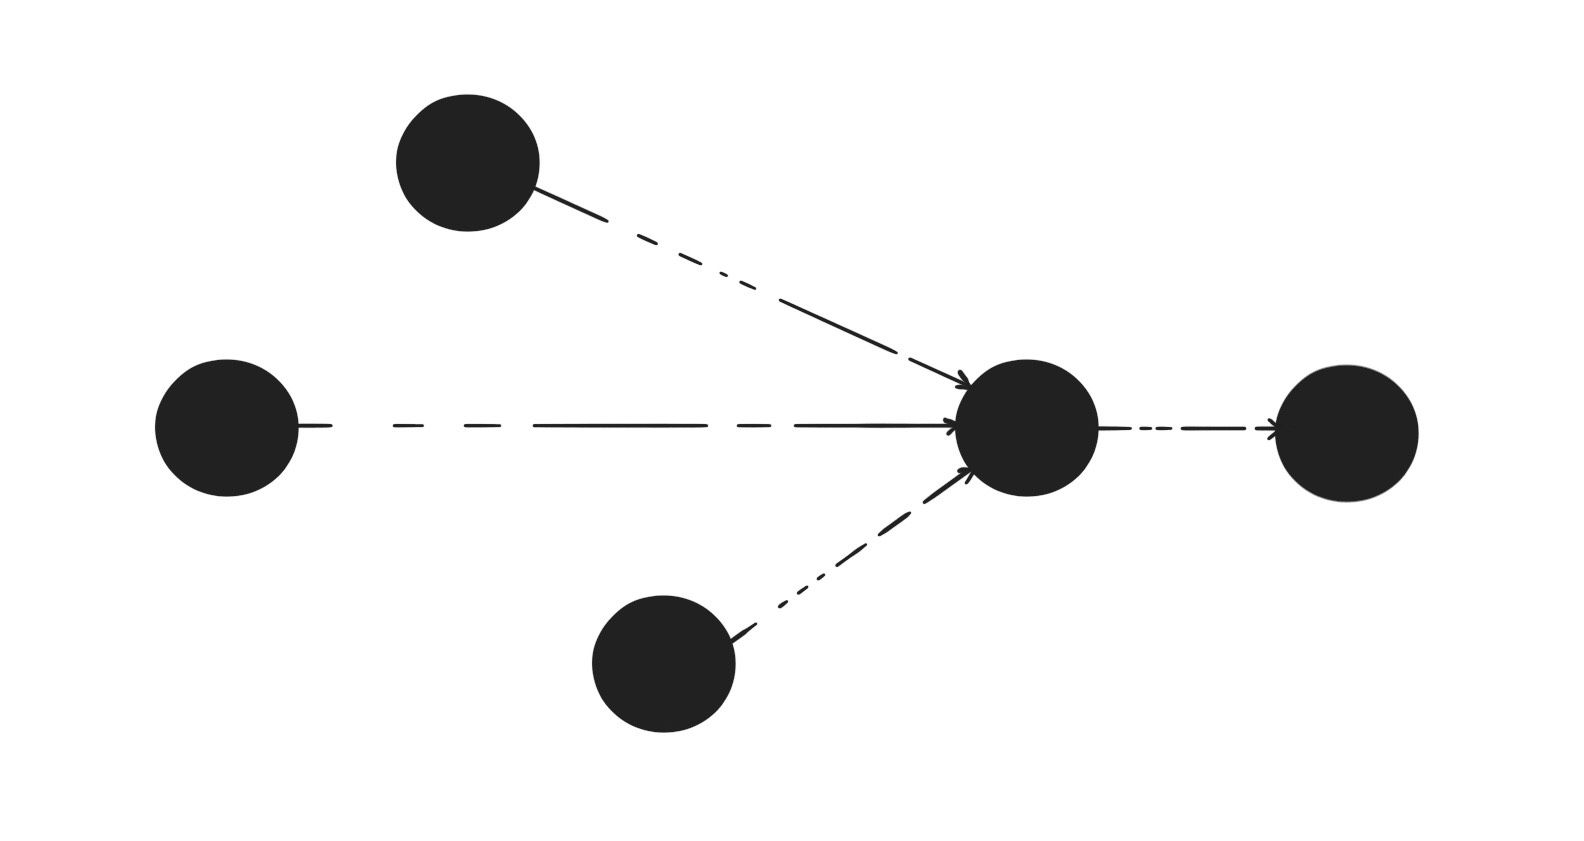 many nodes convering to a single node